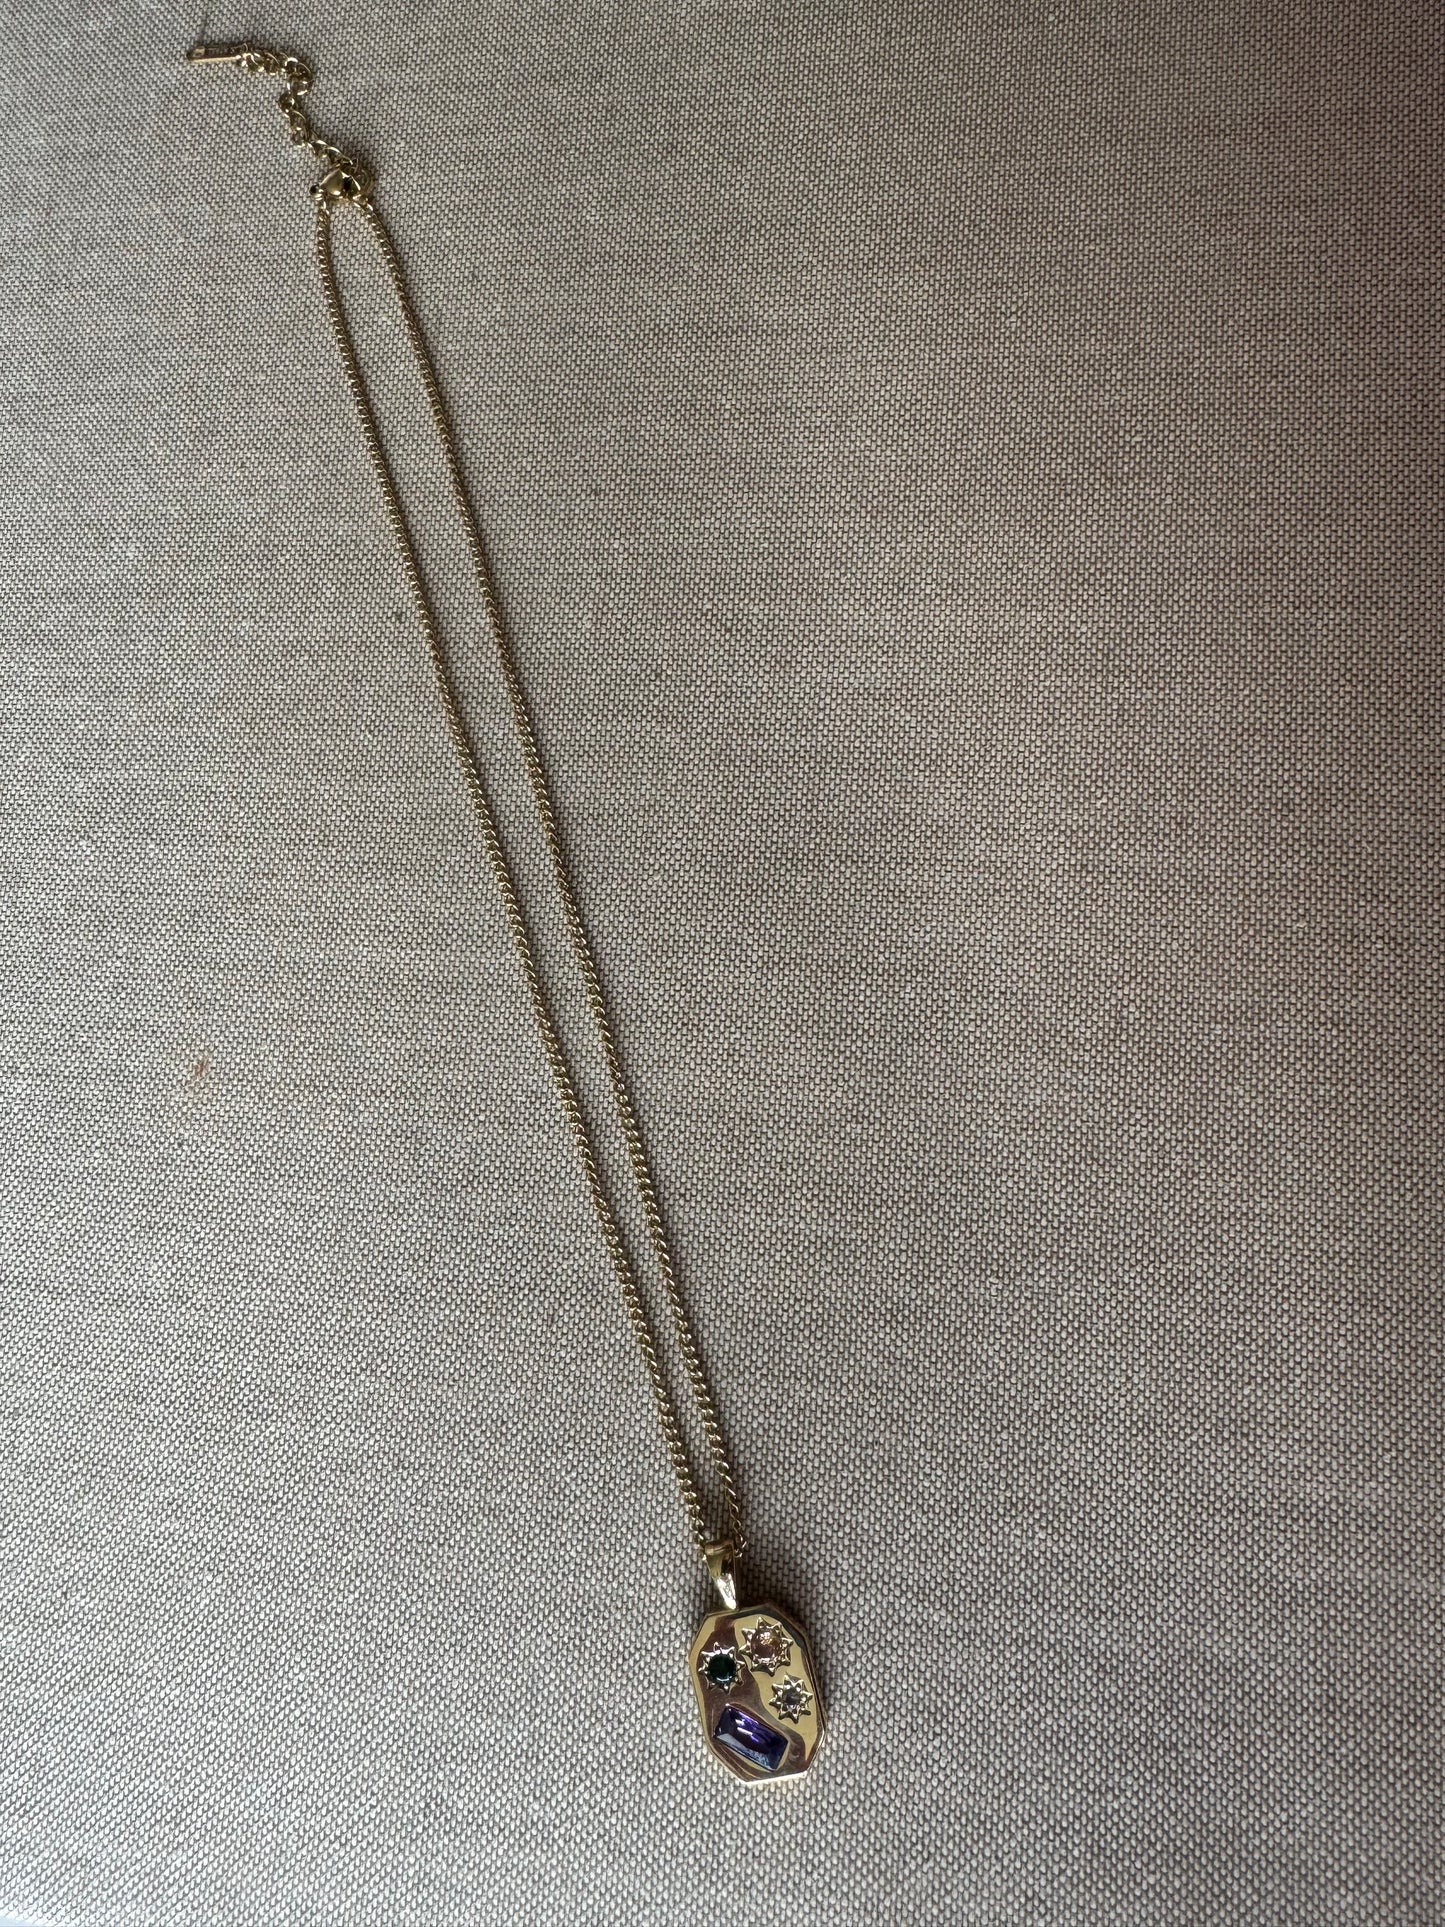 Geo gem necklace in gold